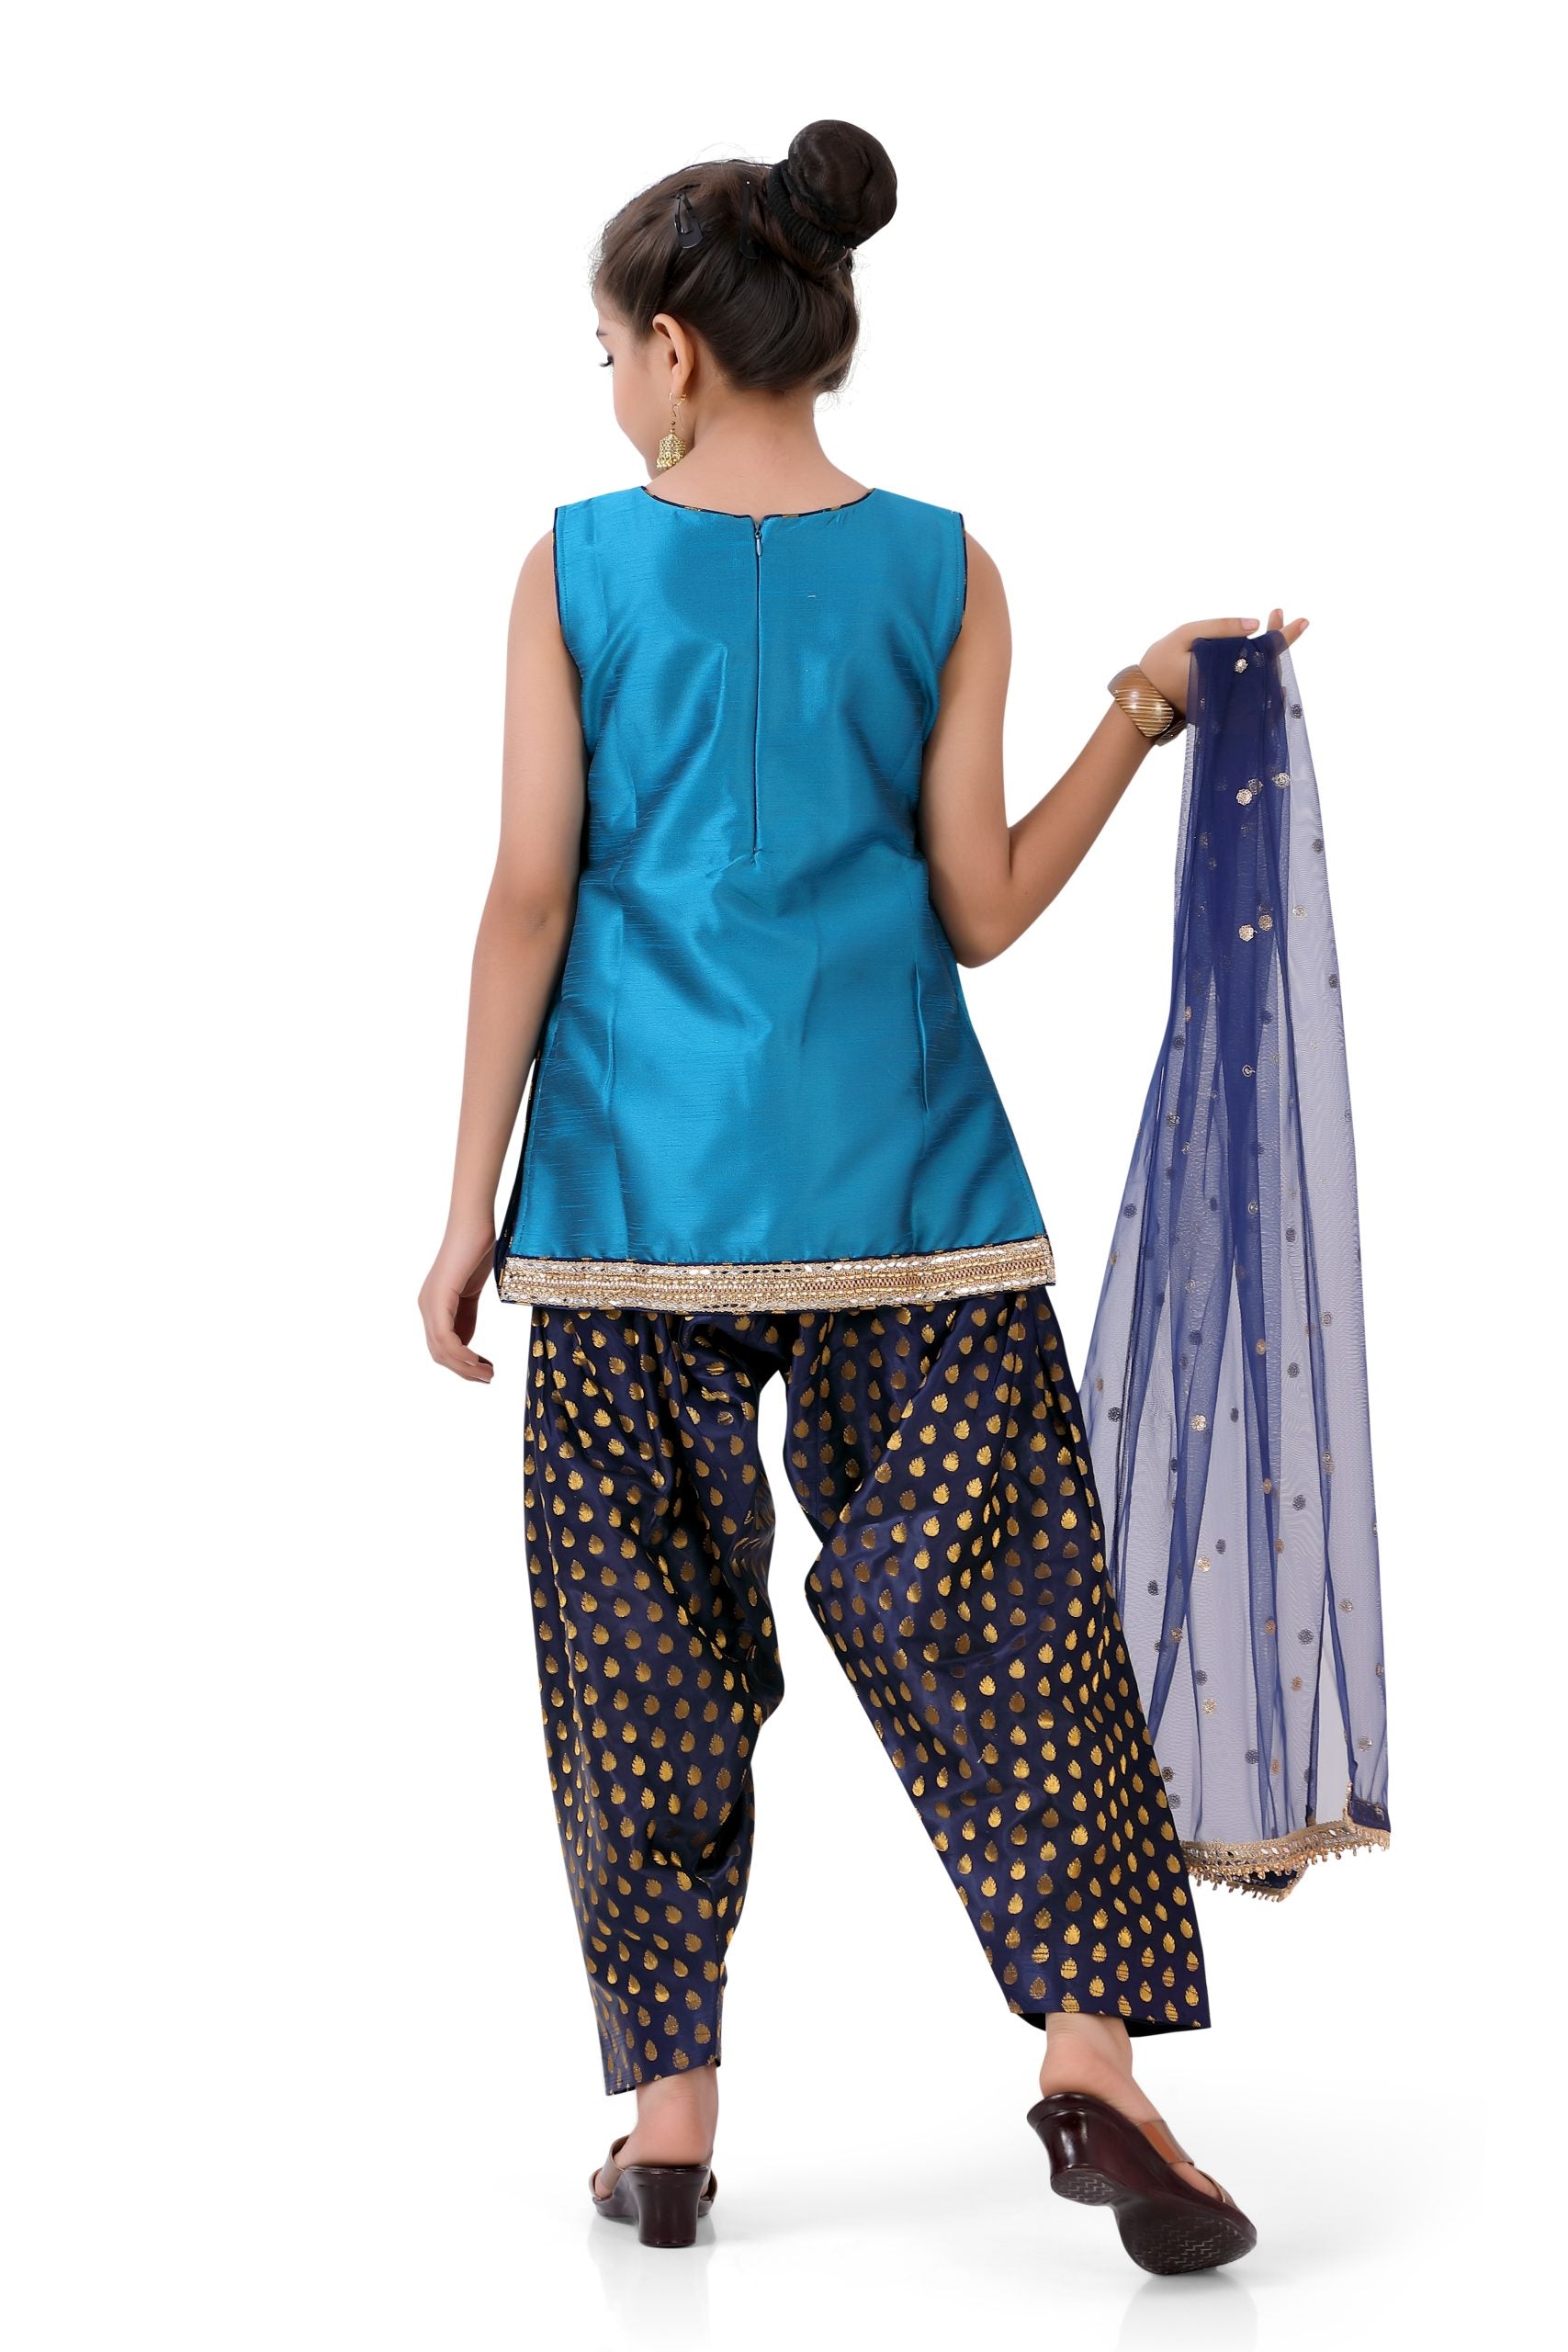 Girl's Patiyala Salwar kameez in Blue